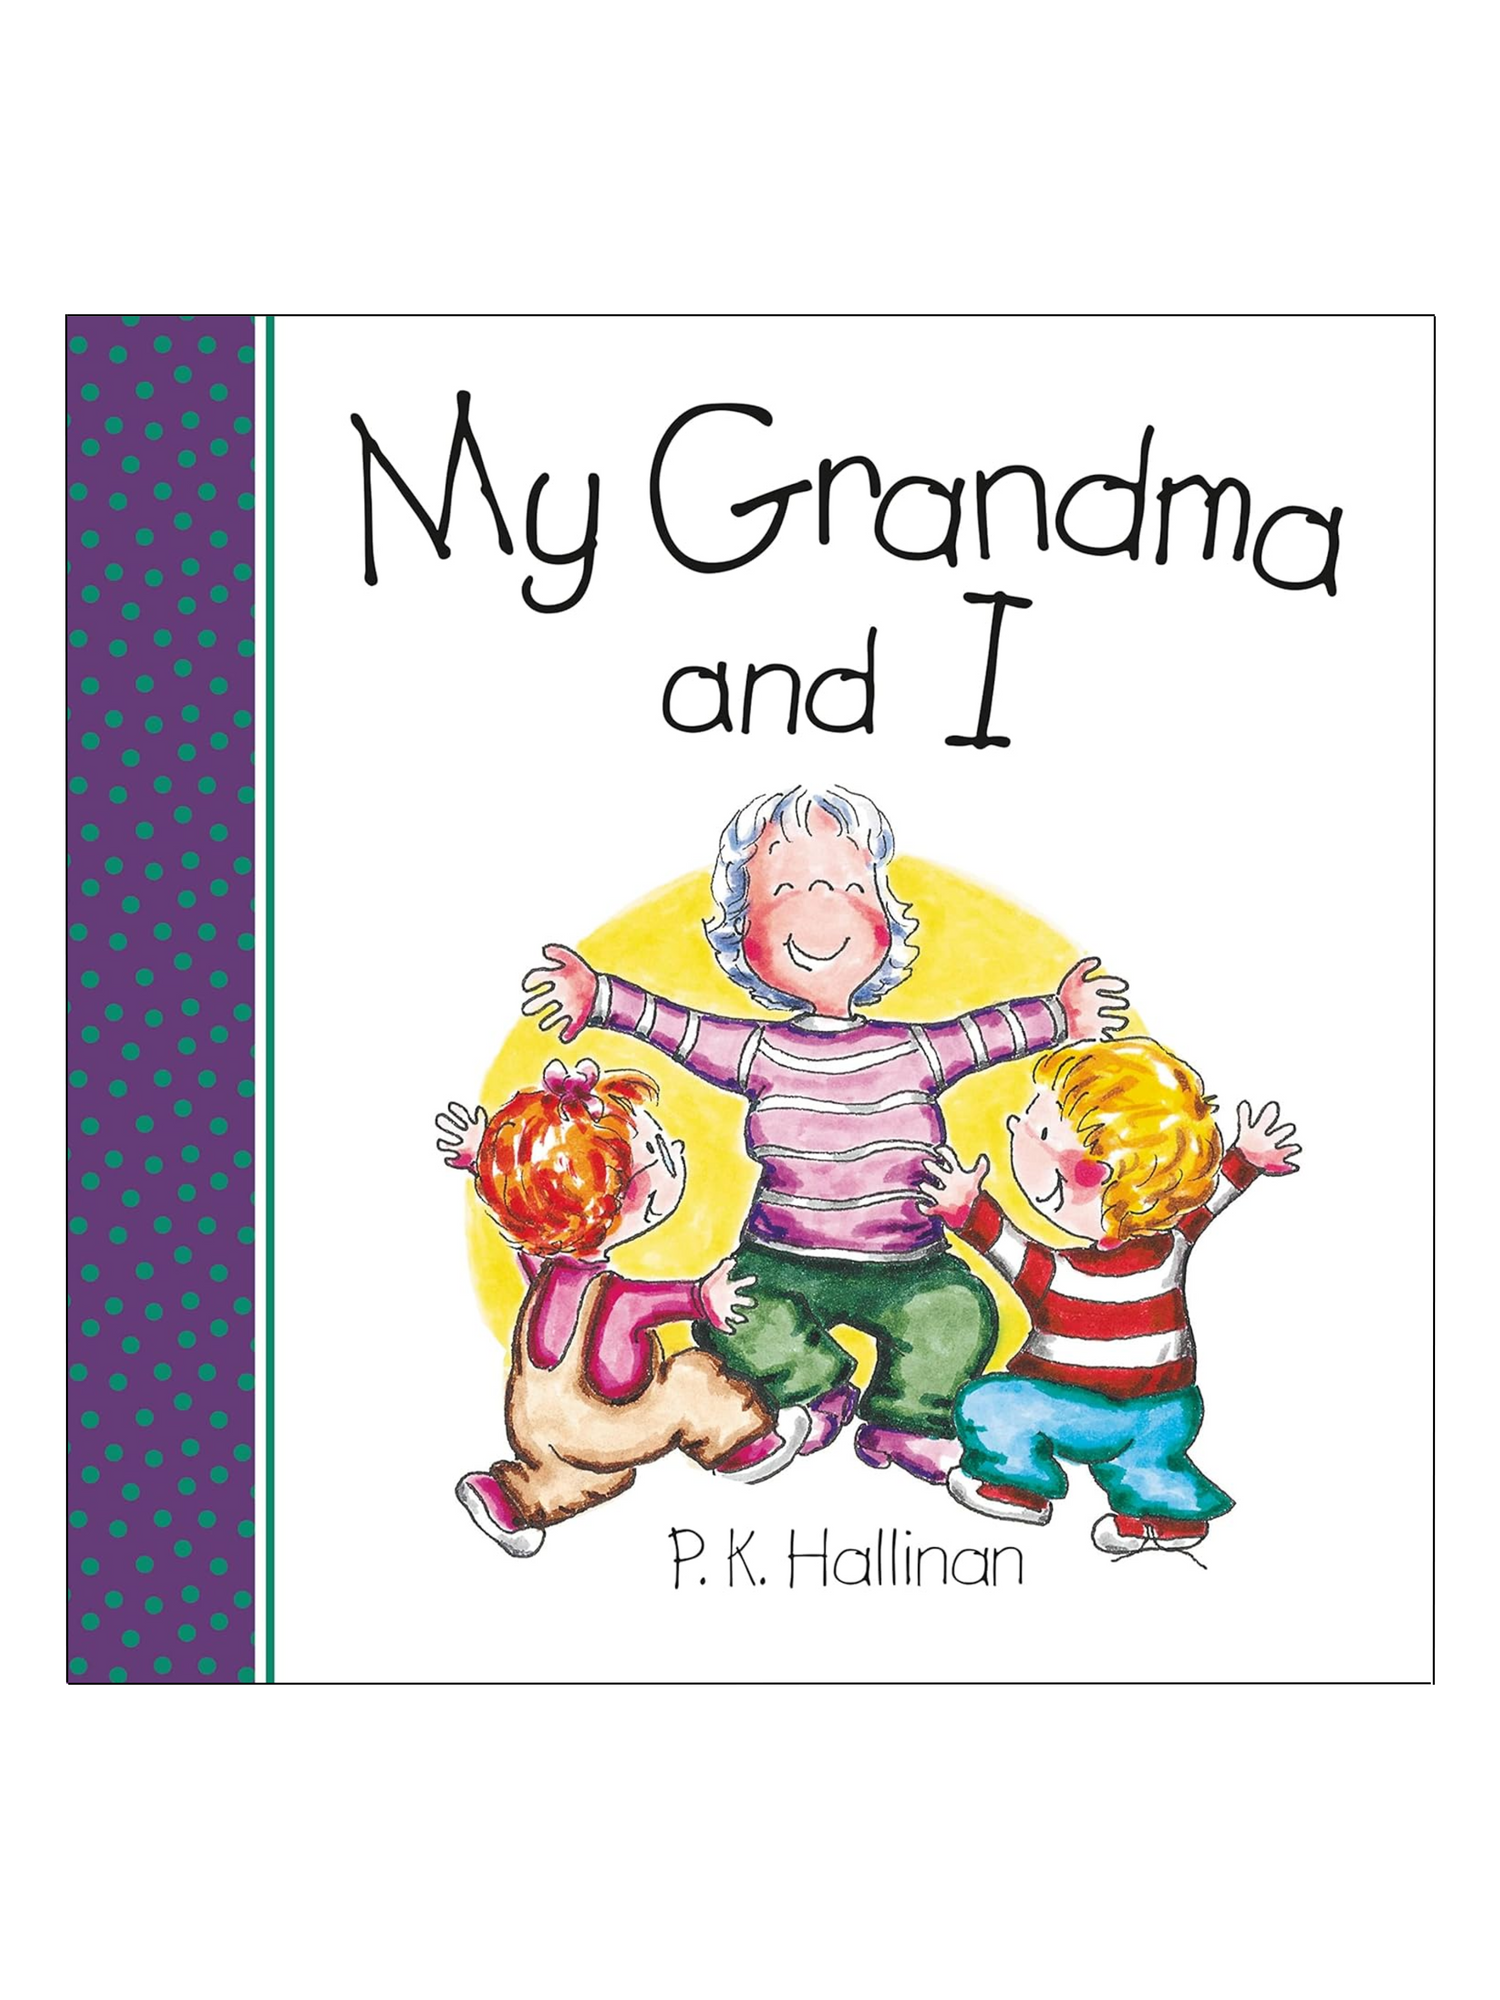 MY GRANDMA AND I CHILDREN'S BOOK - THE LITTLE EAGLE BOUTIQUE